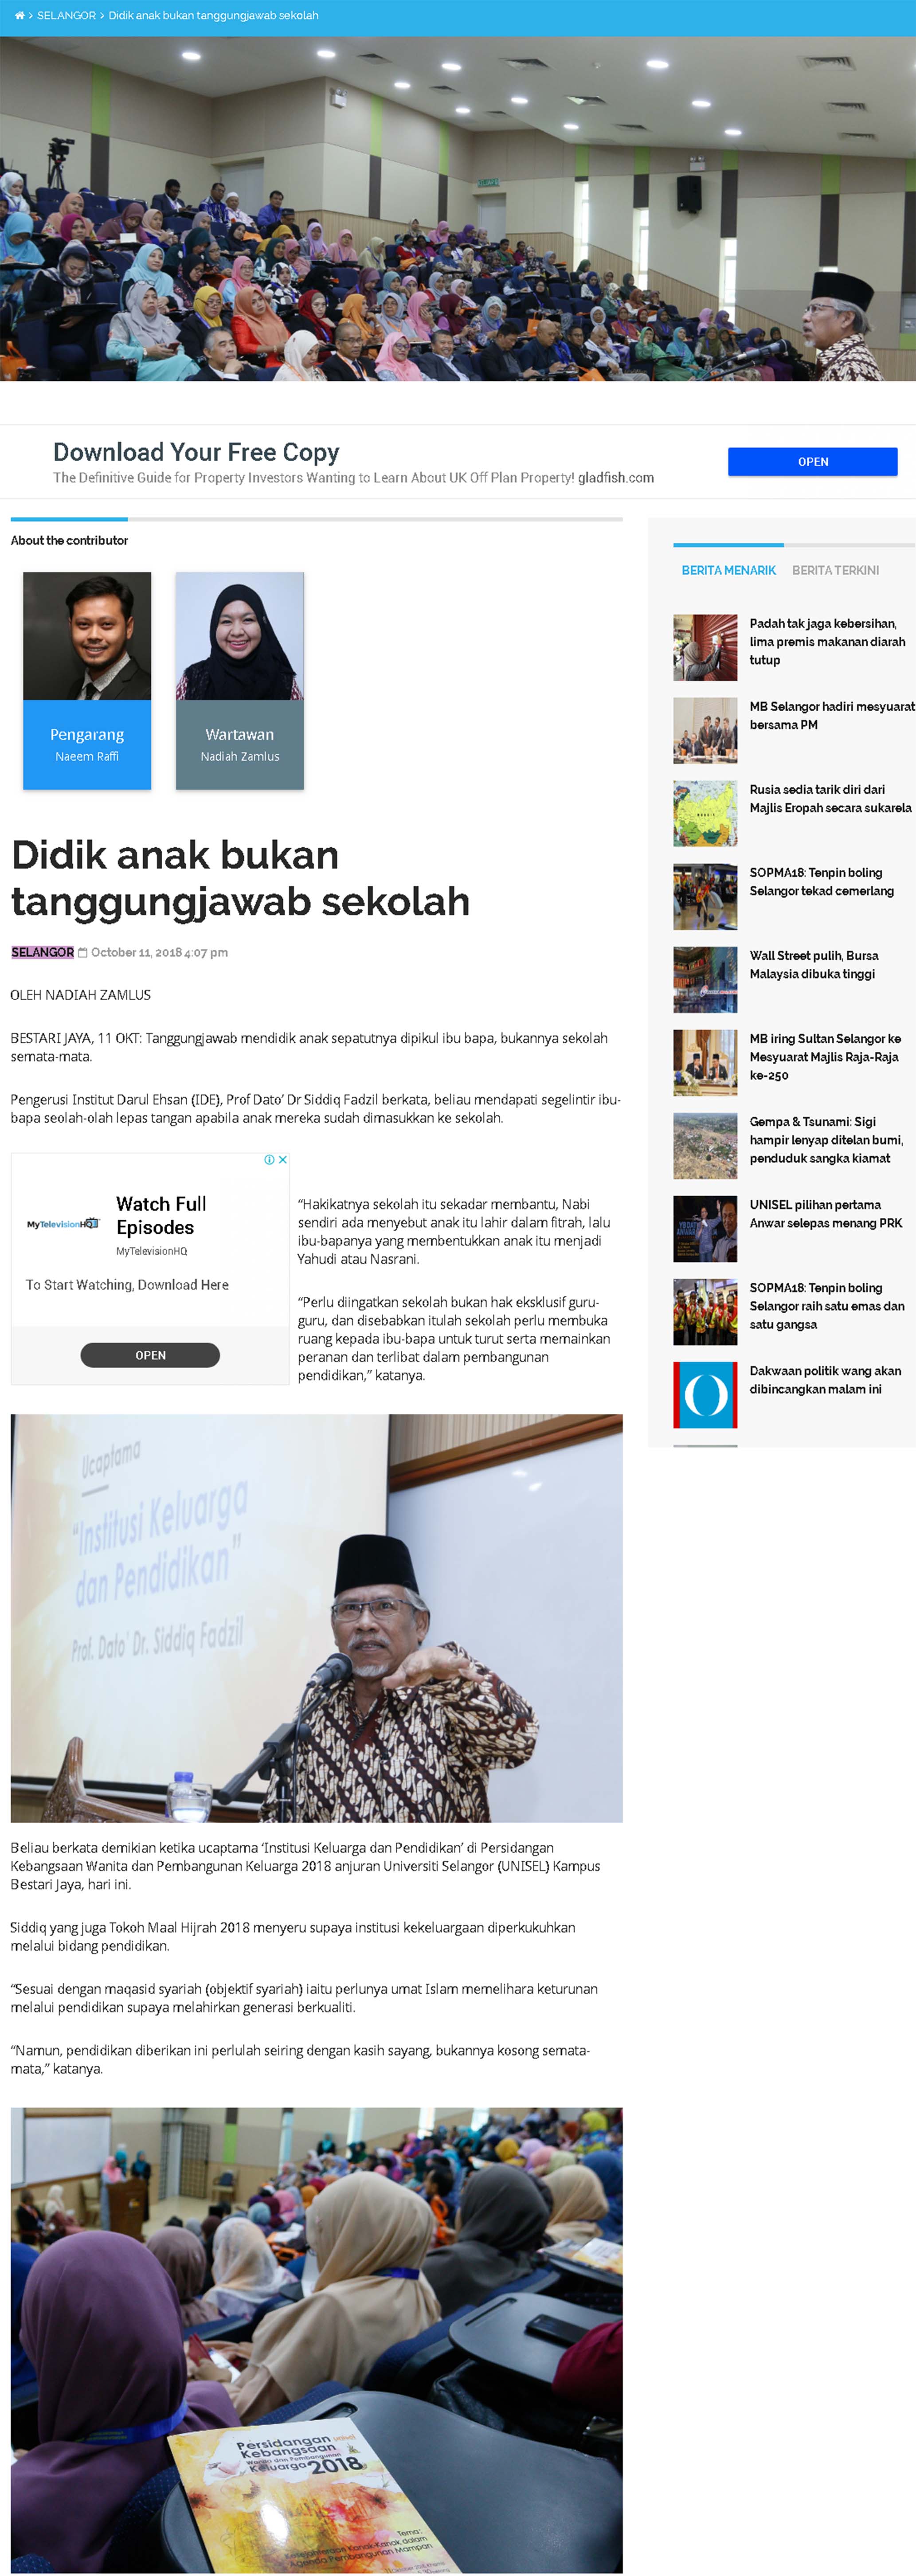 Selangor Kini Online - 11 Oktober 2018